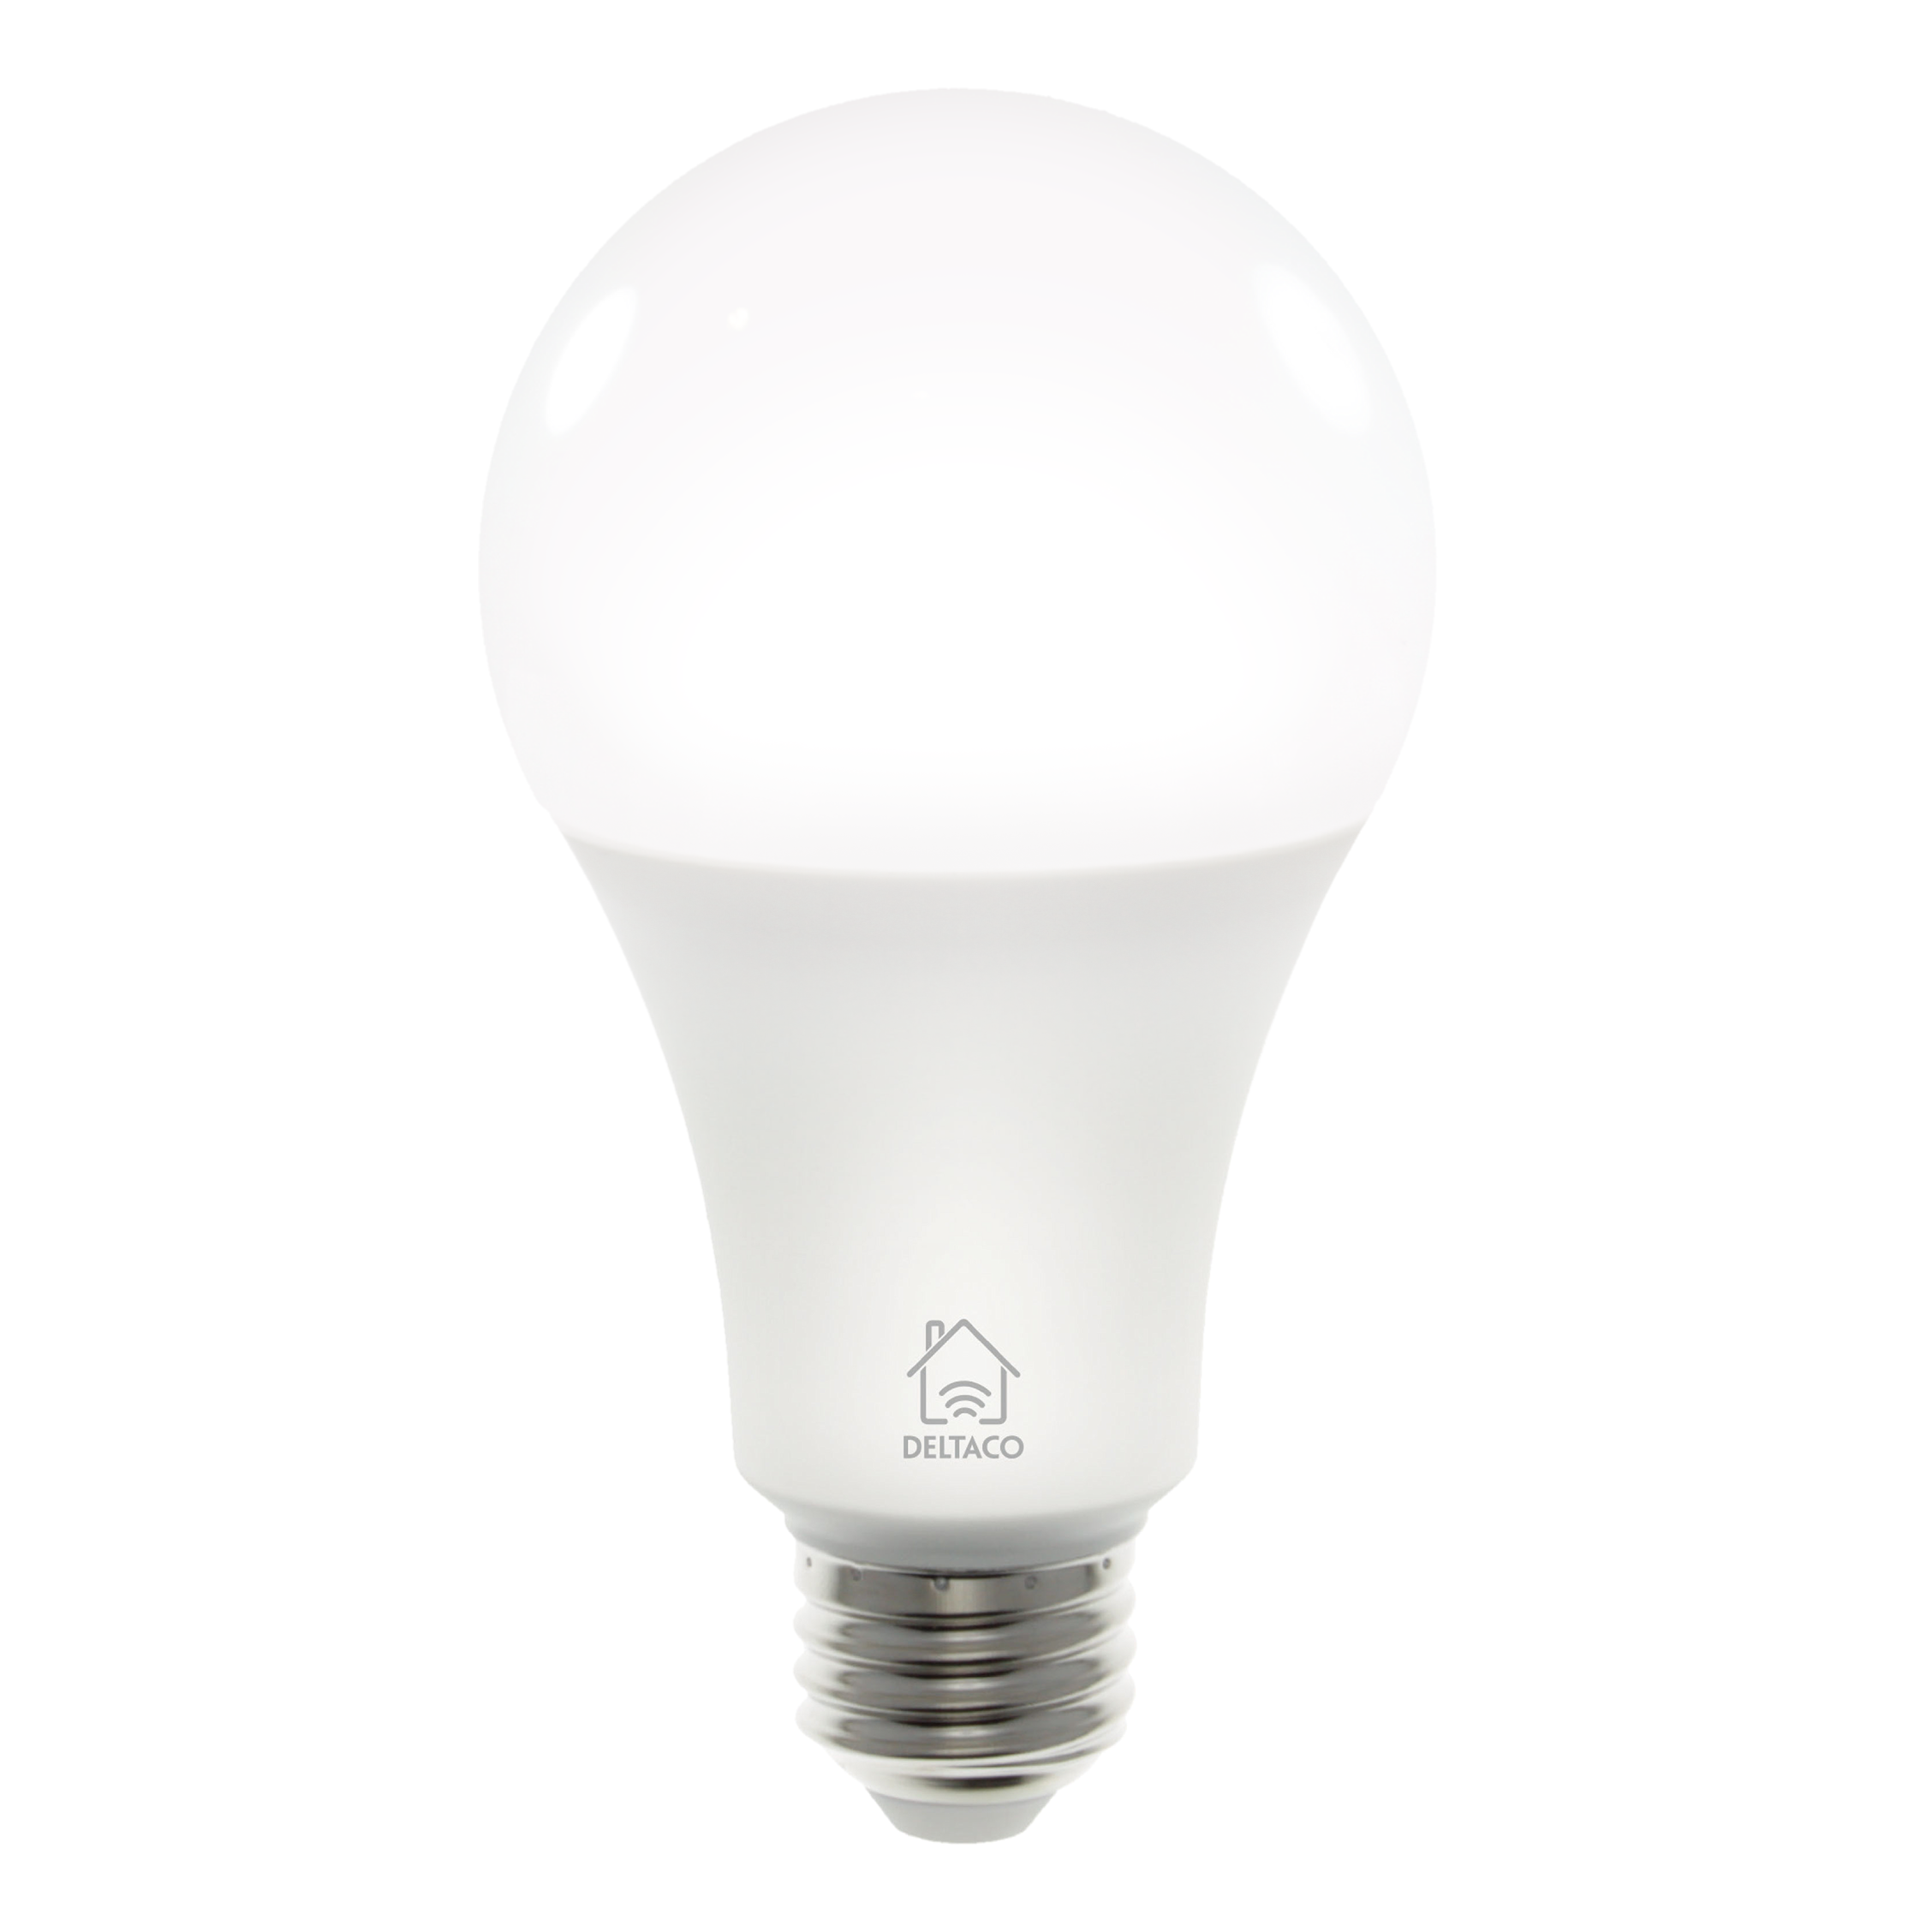 DELTACO Smart Bulb E27 LED Bulb 9W 806lm WiFi – Dimmable White LED Light